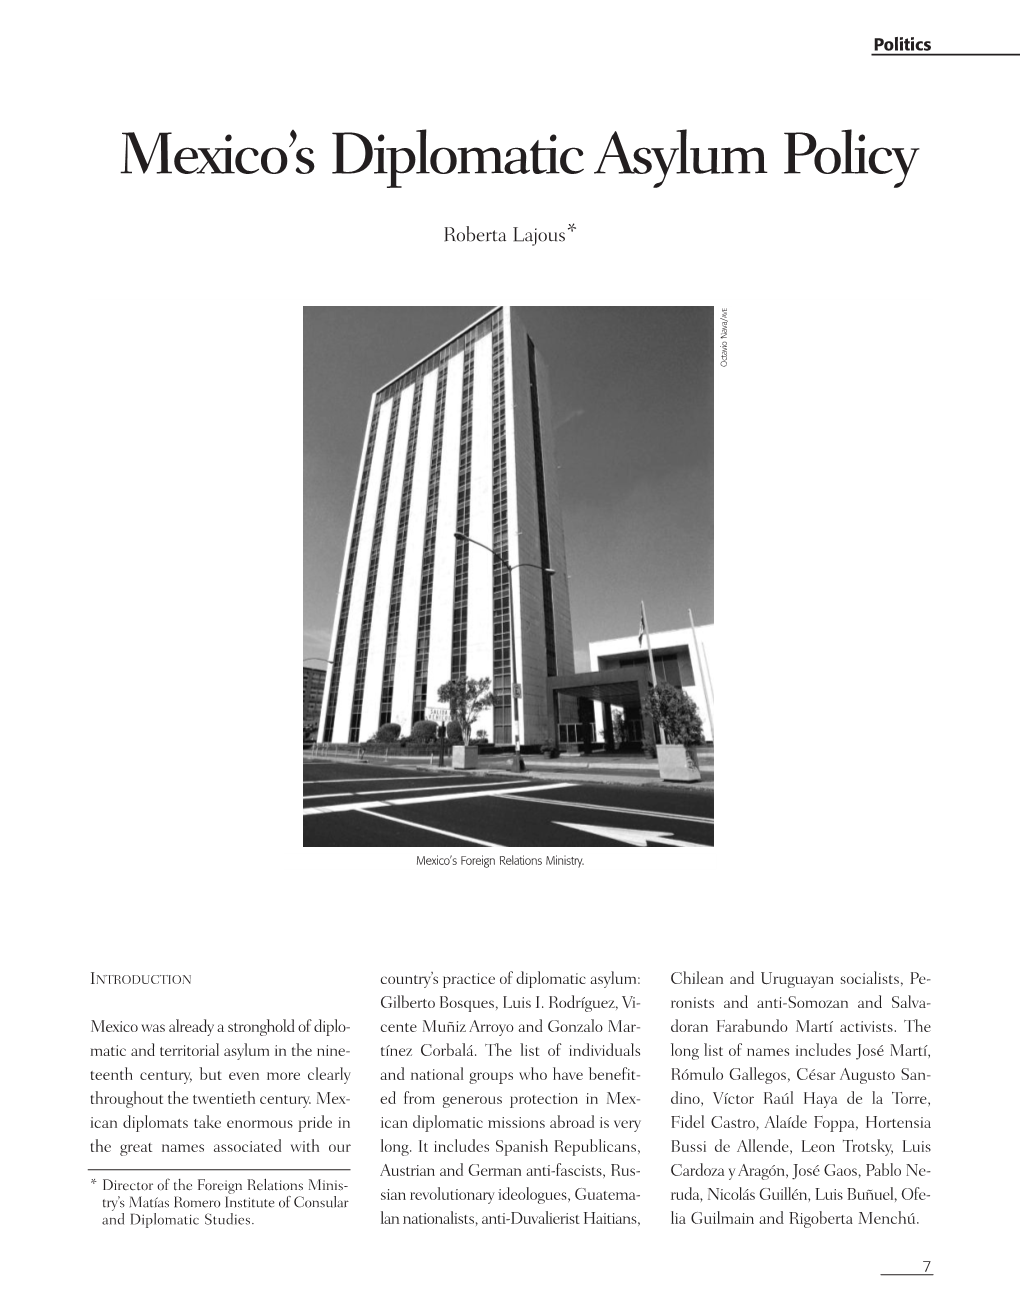 Mexico's Diplomatic Asylum Policy